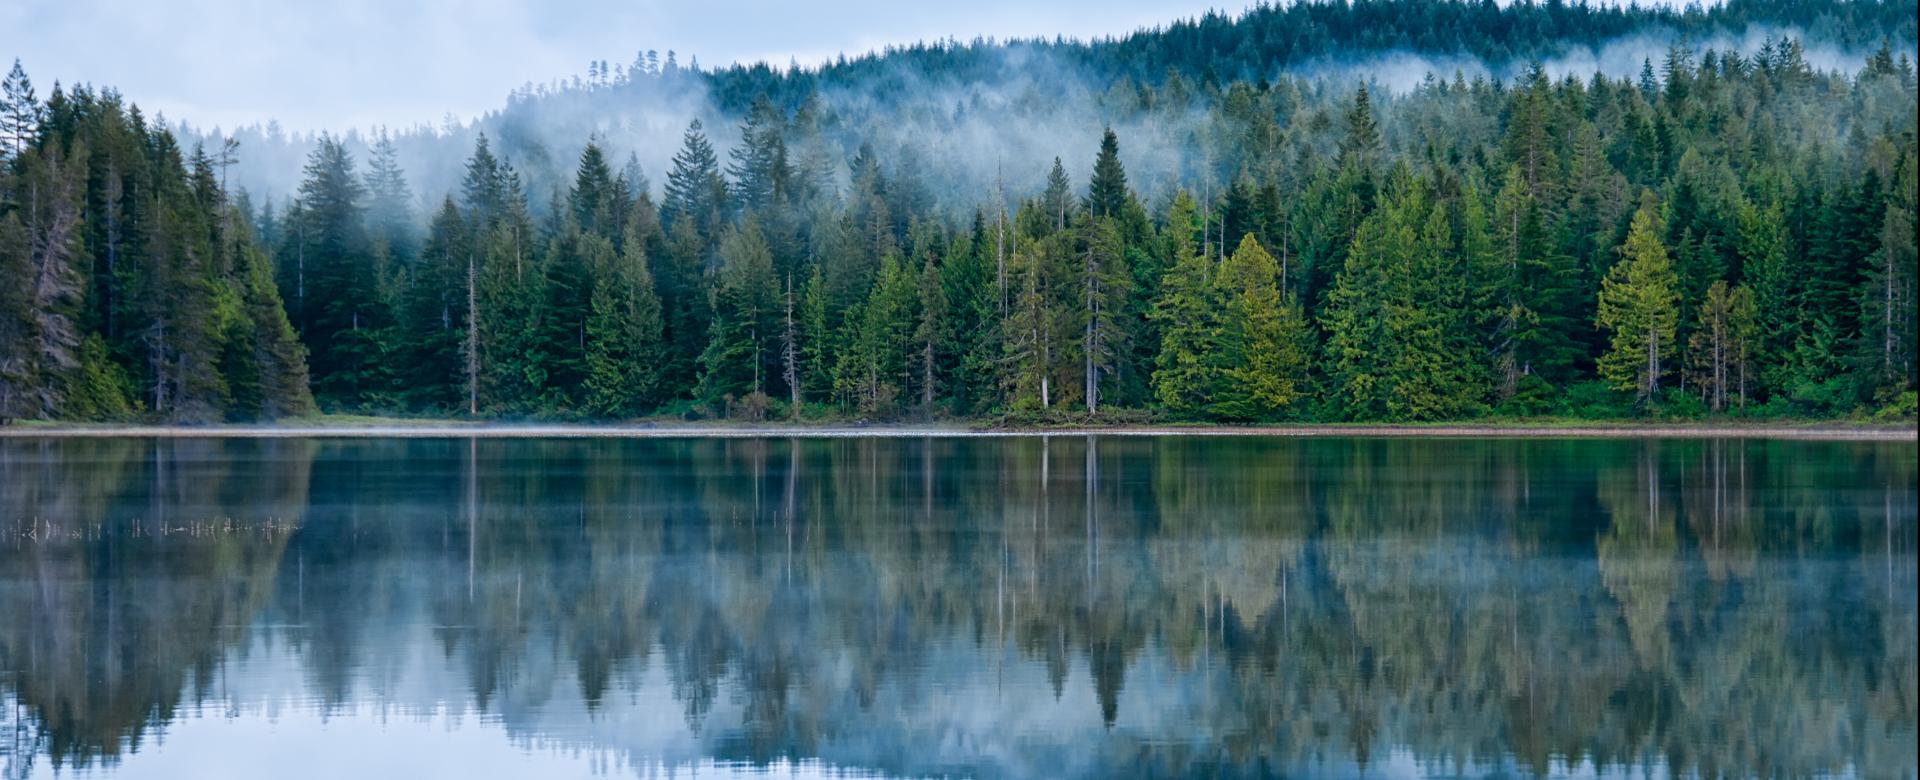 Trees reflect on lake